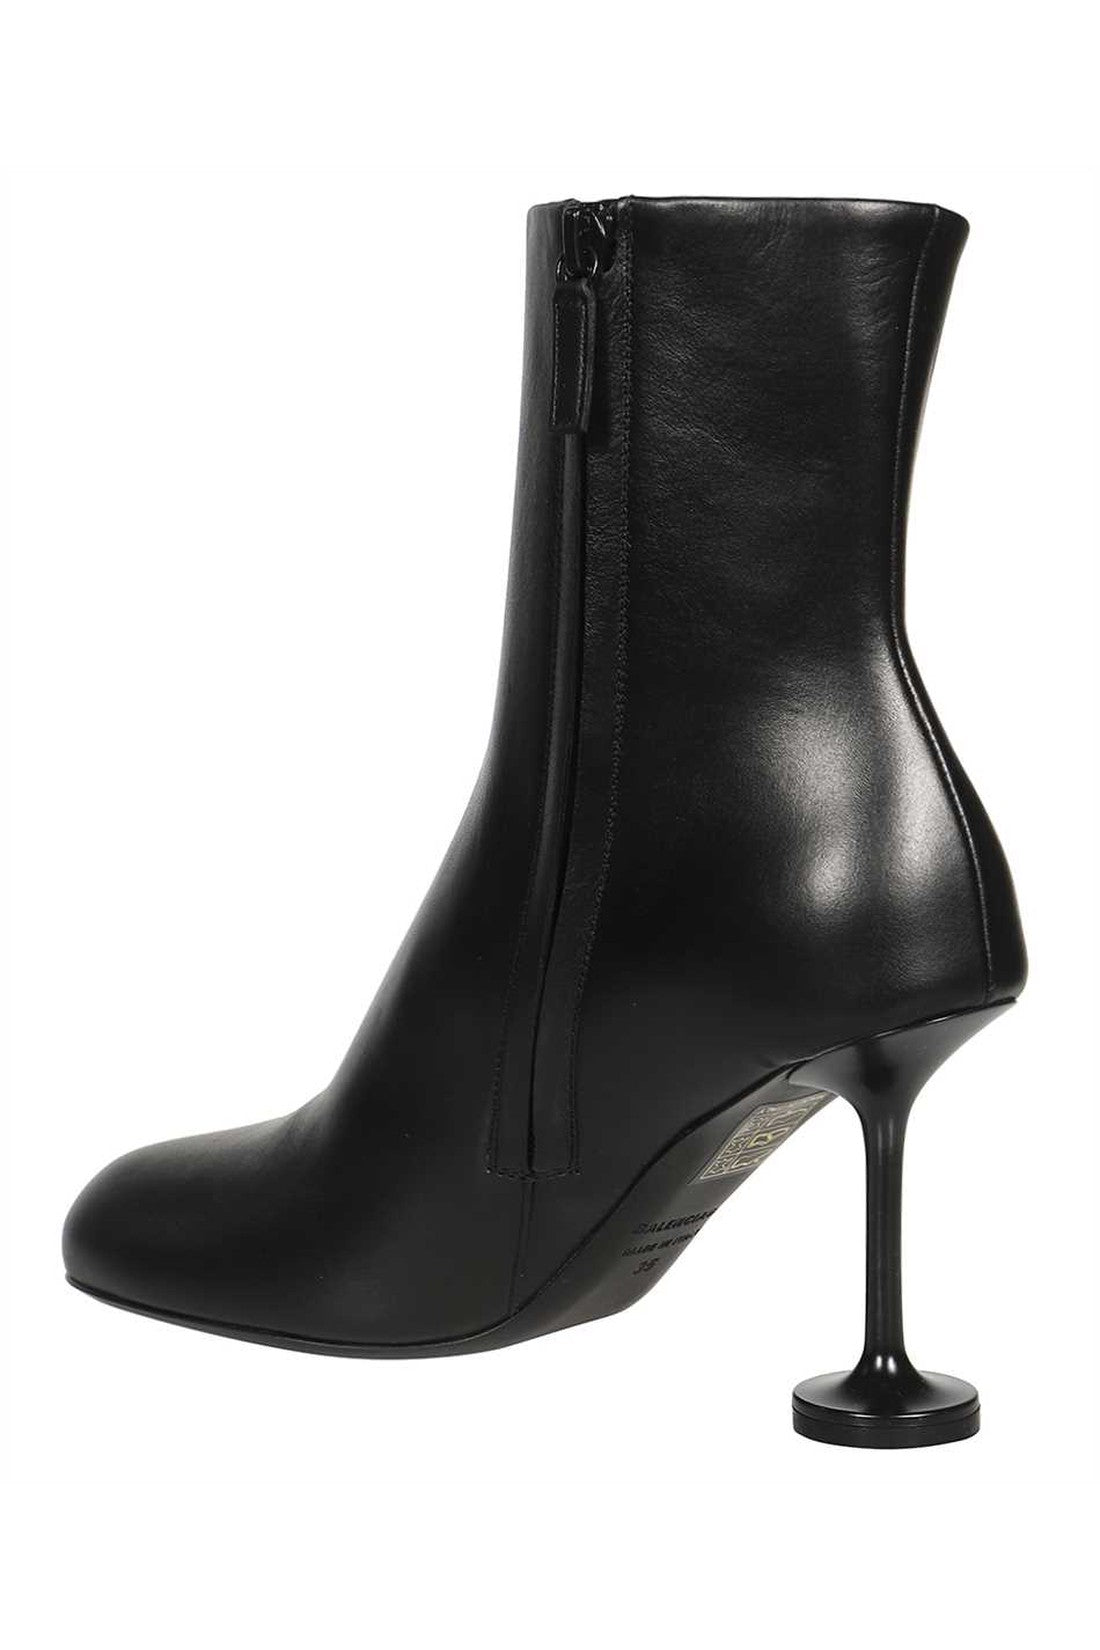 Leather ankle boots-Balenciaga-OUTLET-SALE-ARCHIVIST